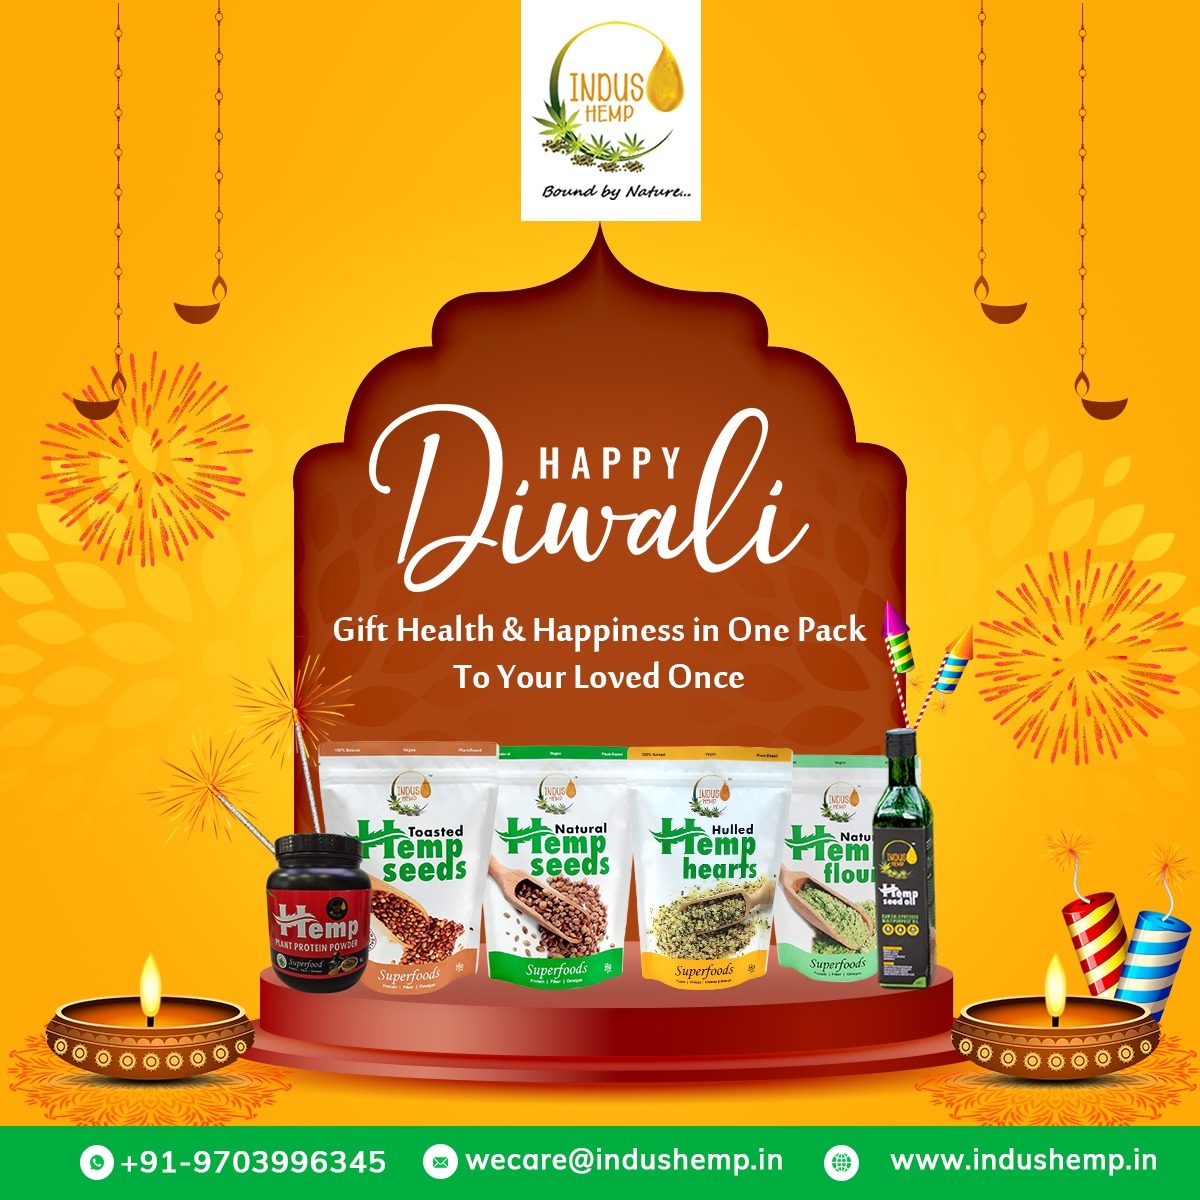 May this Diwali fill your life with joy 🥰, peace 😇 , goodness 😊, wealth🤩, good health 💪, and prosperity🥳! Indus Hemp wishes you a 🎆Happy Diwali 🎇 #Diwali #Diwali2022 #FestivalOfLights #hemp #hemplife #indushemp #hempseedoil #hempseeds #hempflour #hempprotein #hemphearts